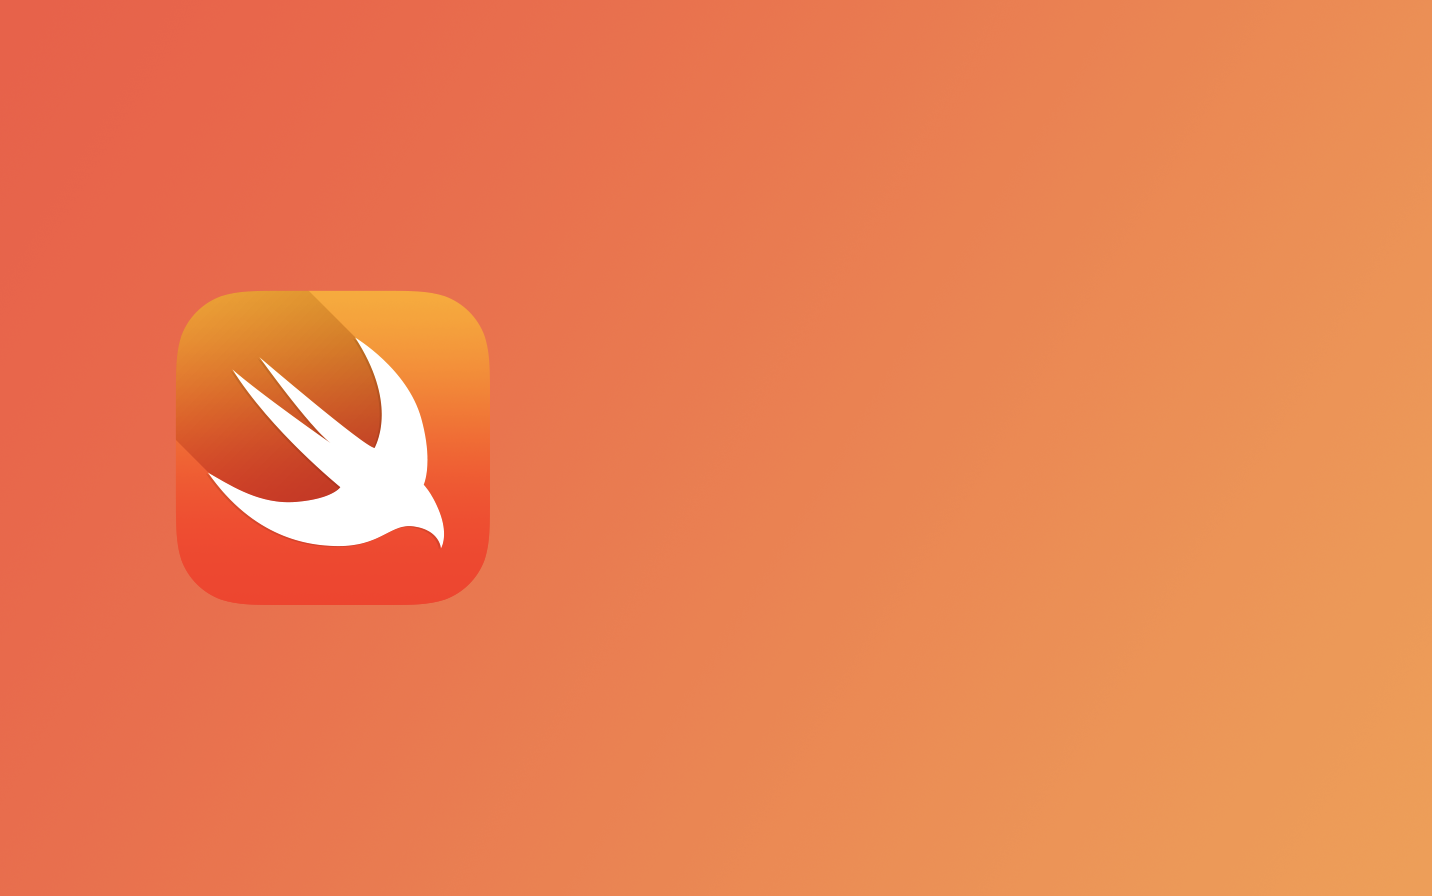 Swift, iOS & OS X Programming